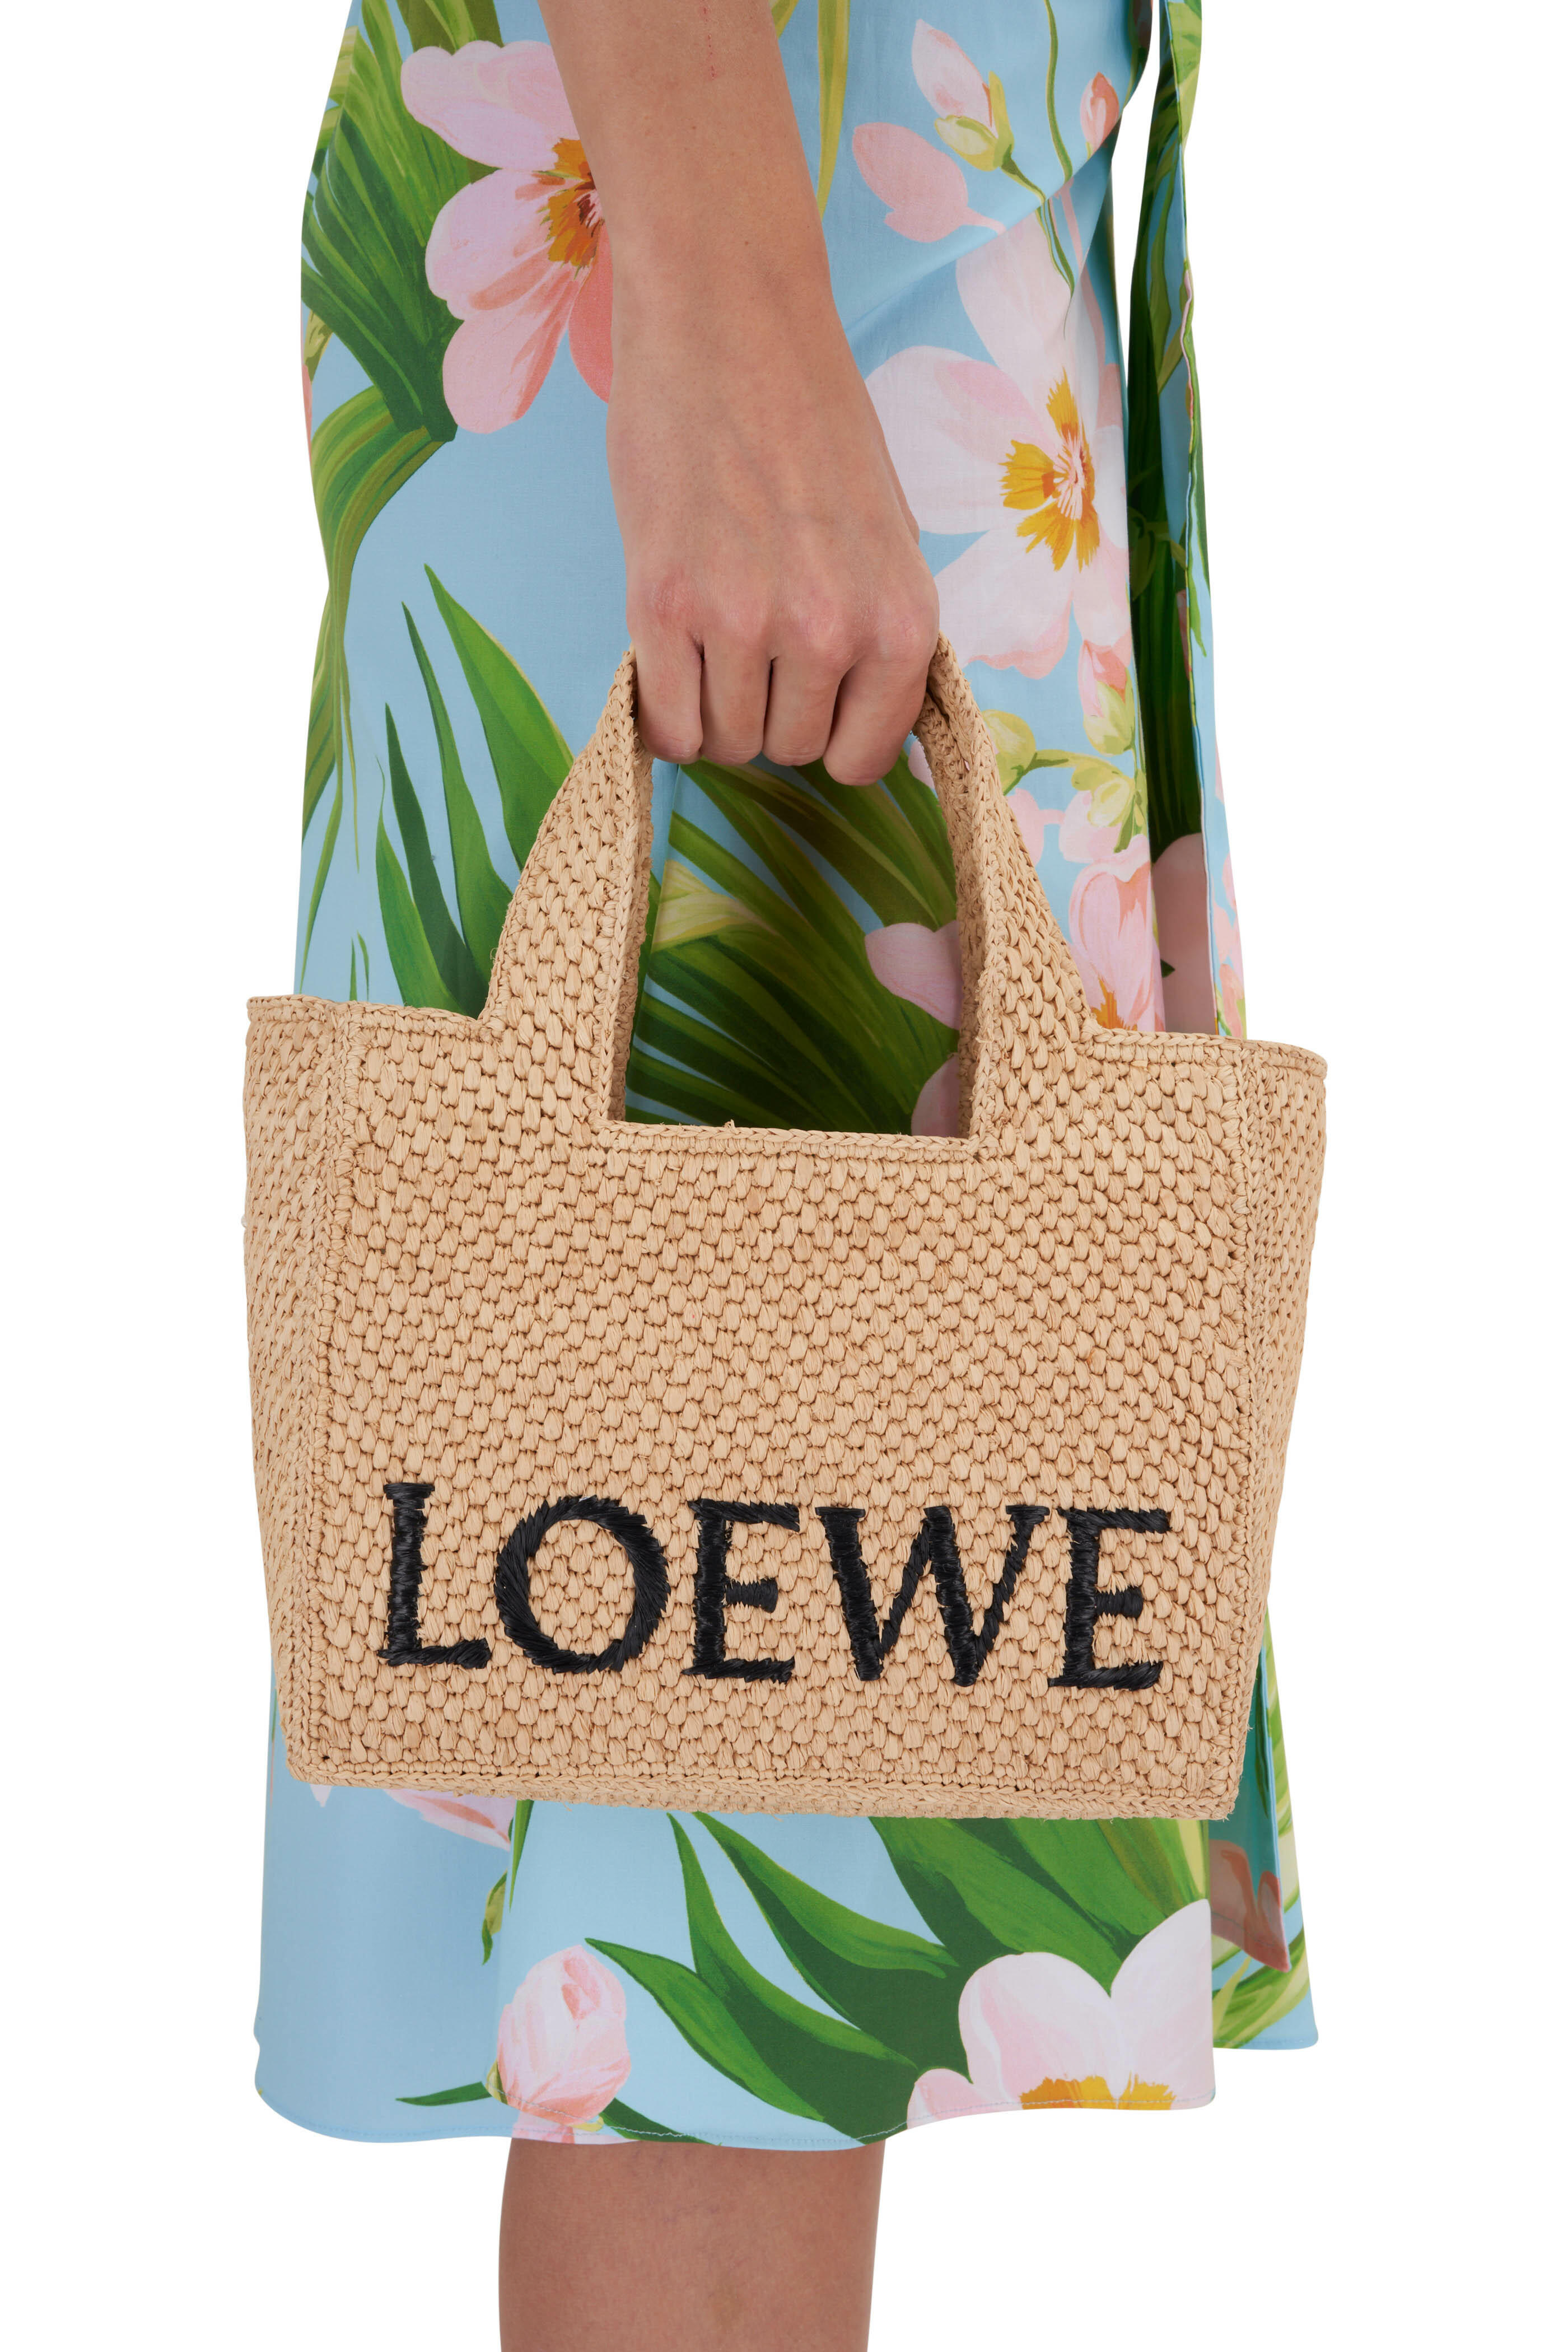 Loewe Women's Small Loewe Font Raffia Tote